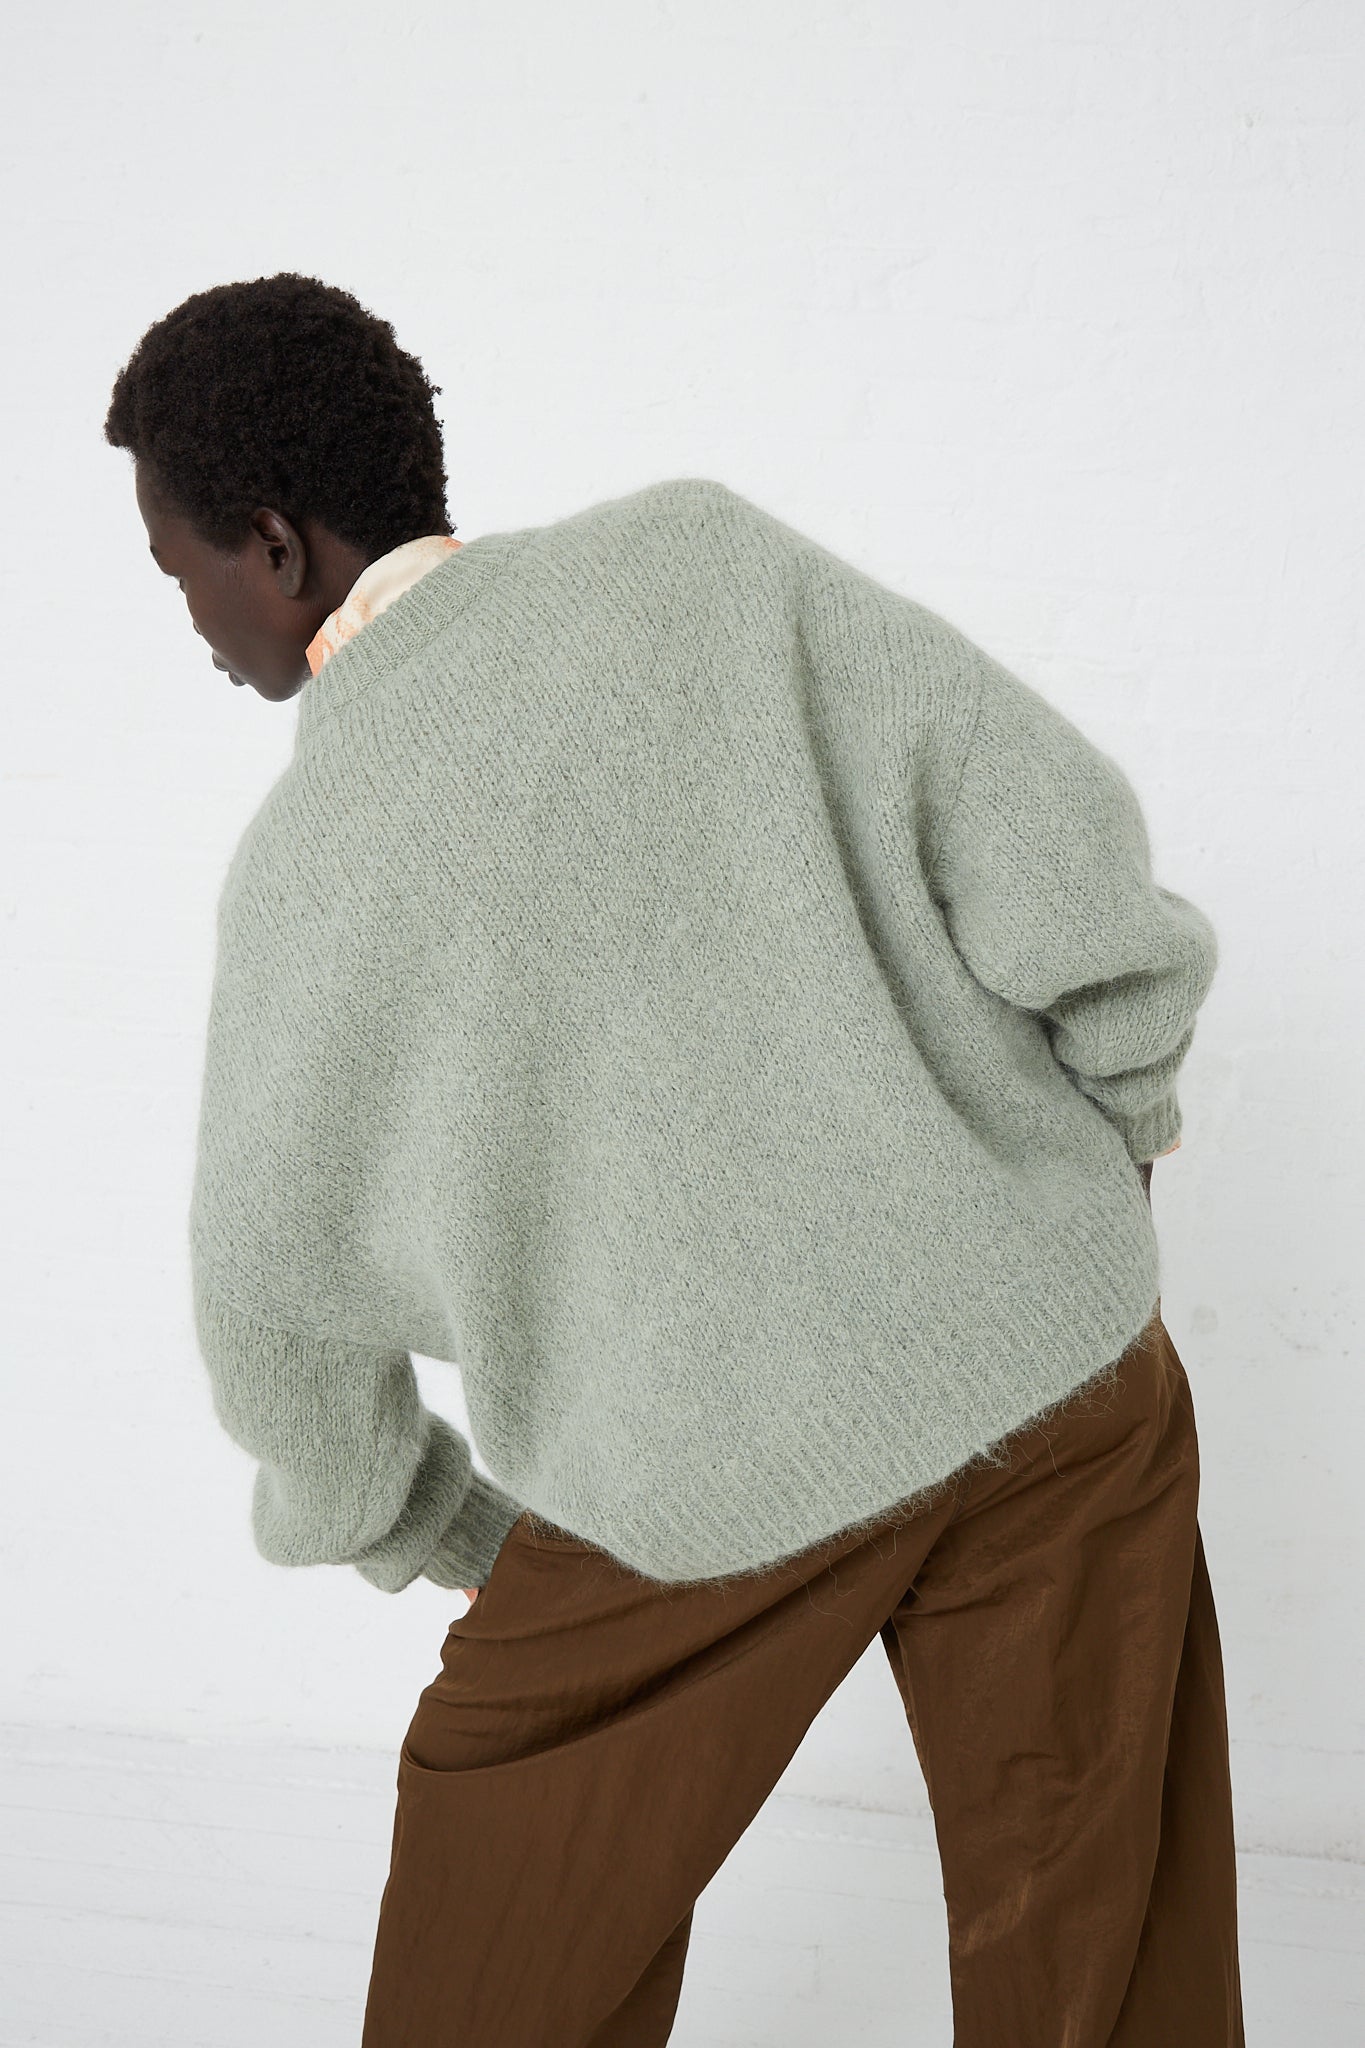 The model is wearing an Alpaca Blend Toni Sweater in Mint from Rejina Pyo.